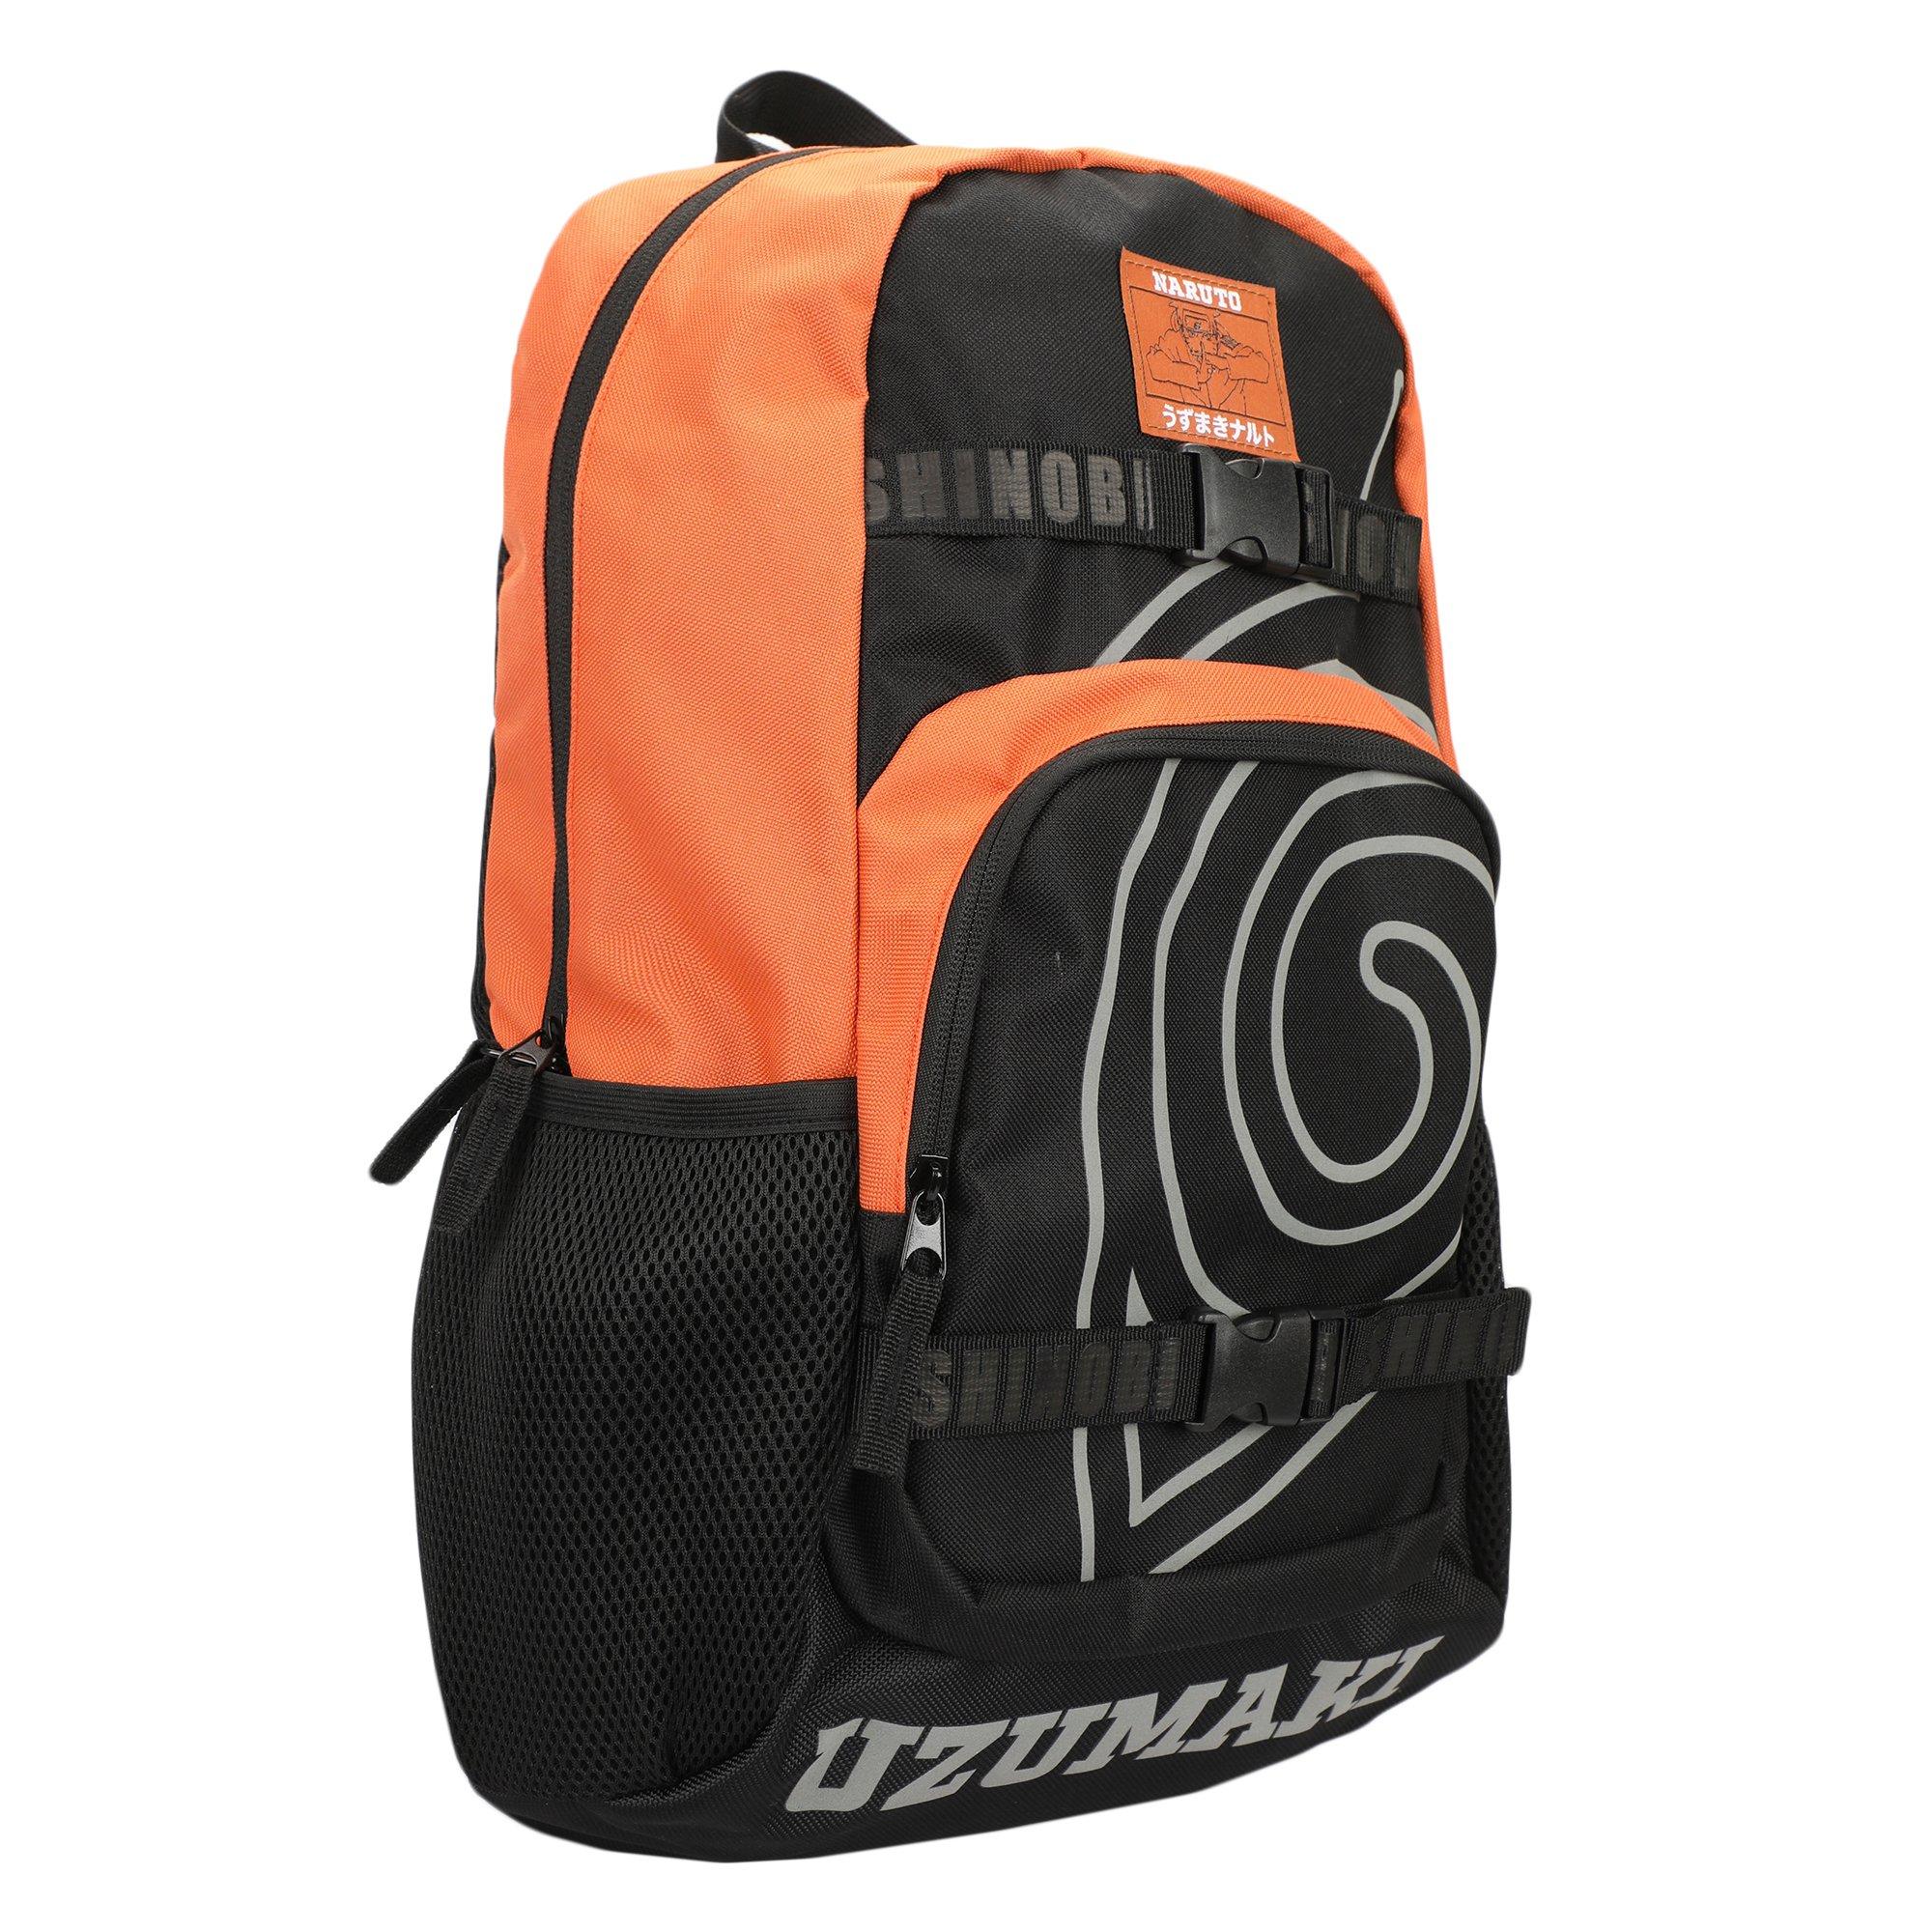 Naruto Backpack 